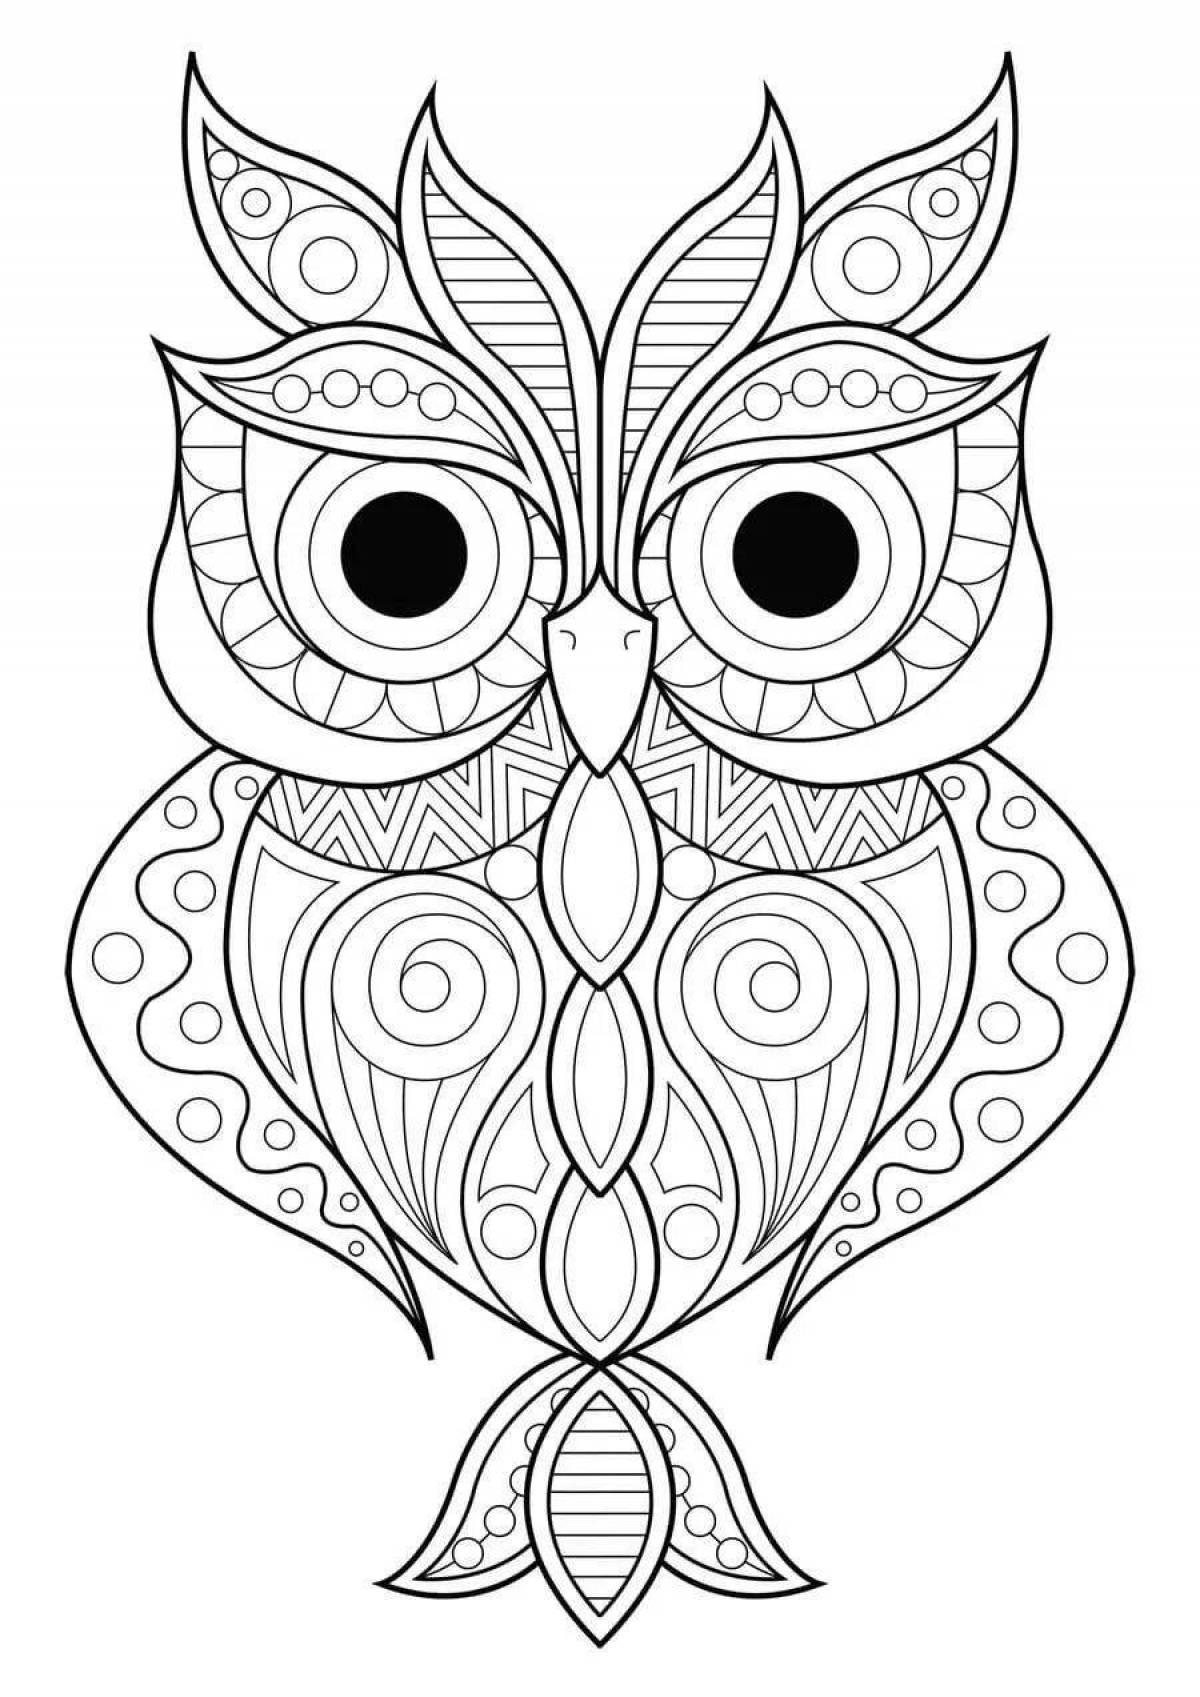 Fun owl coloring book